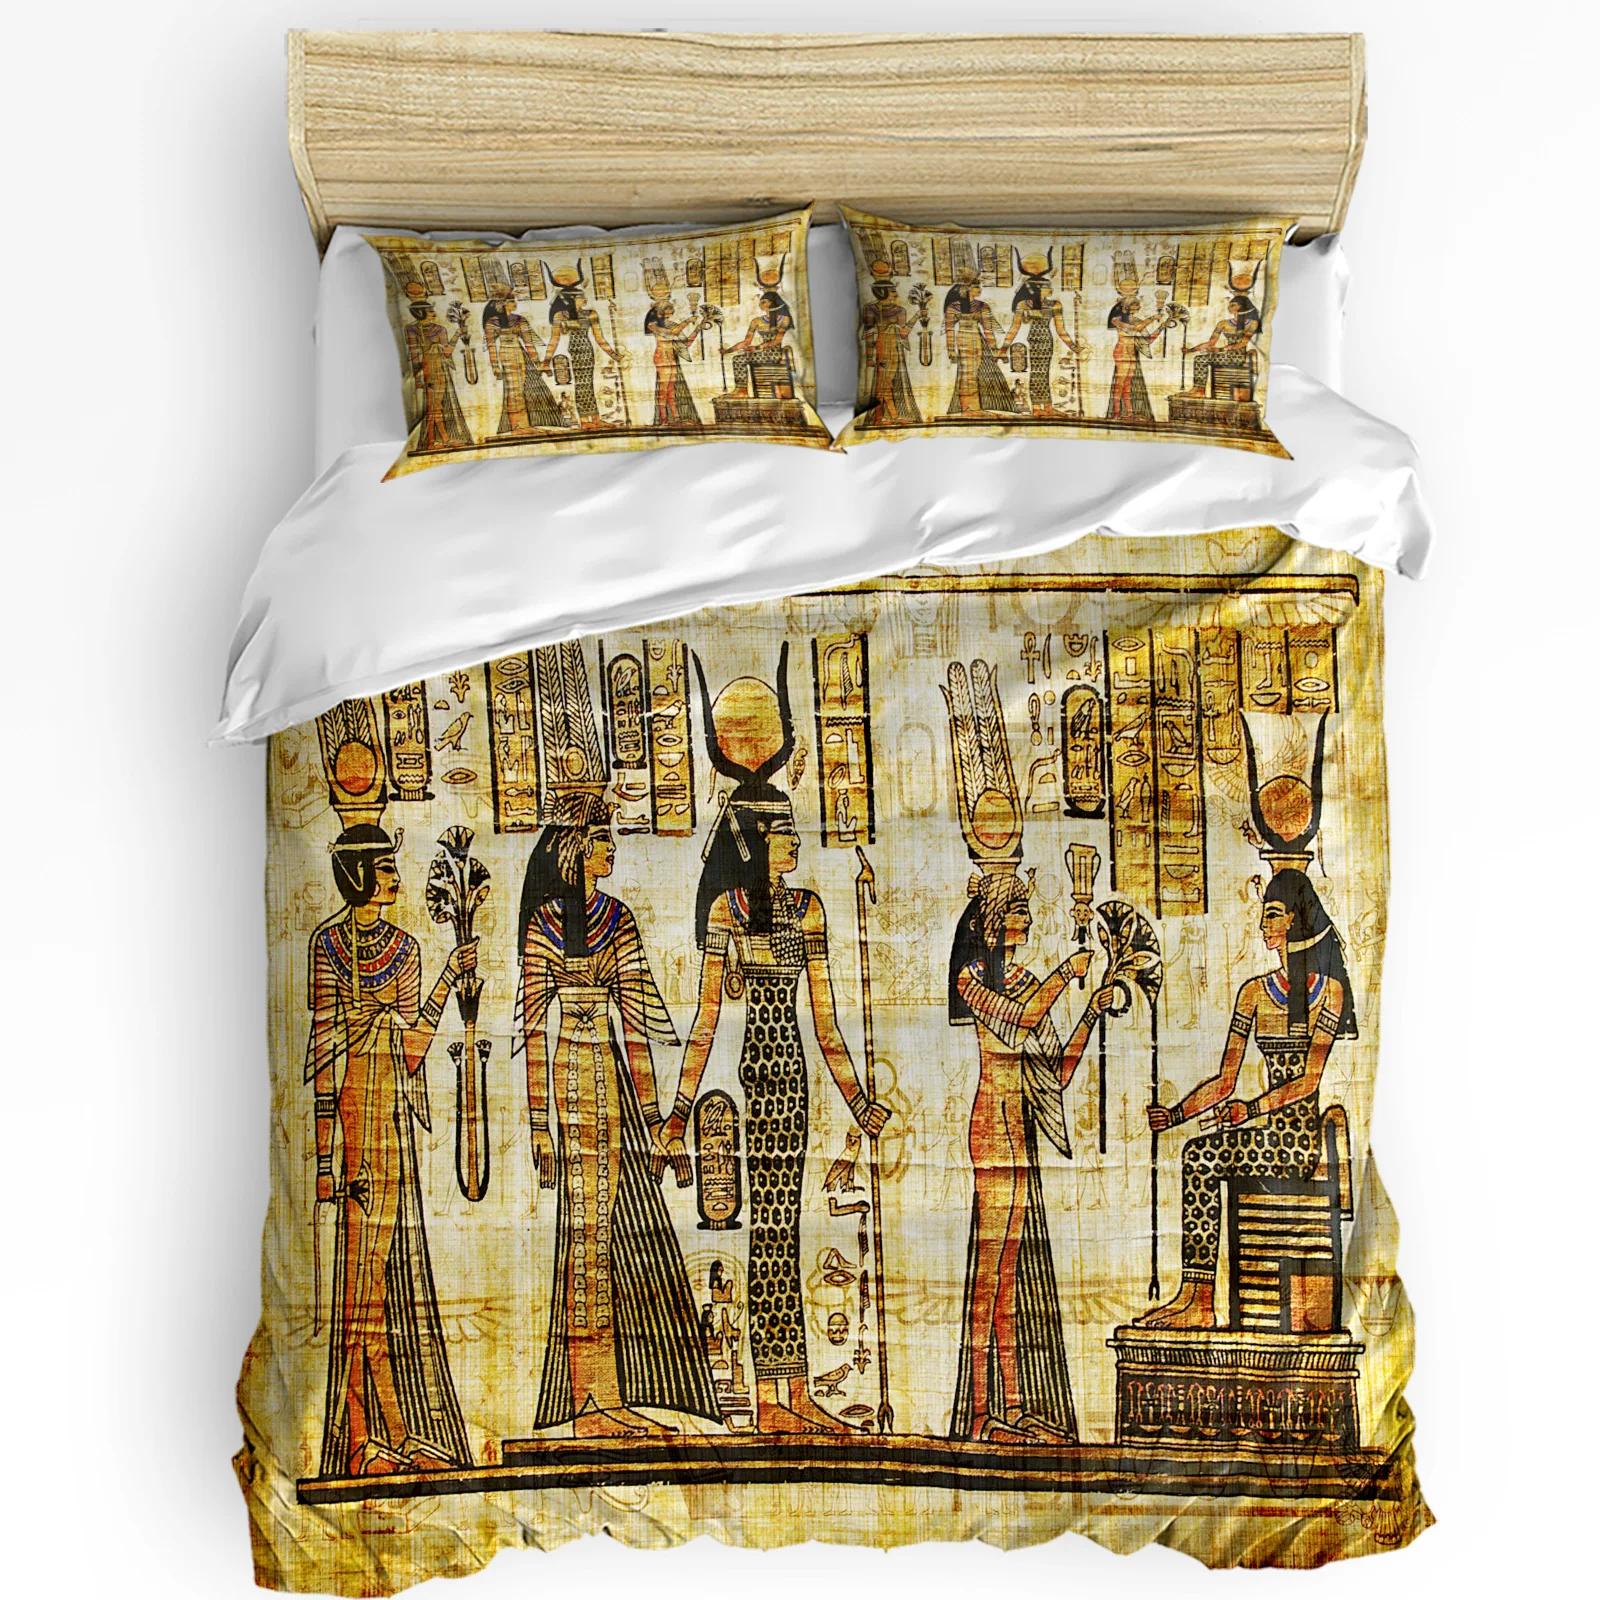 Ancient Egypt Retro Totem Mural Bedding Set 3pcs Duvet Cover Pillowcase Kids Adult Quilt Cover Double Bed Set Home T